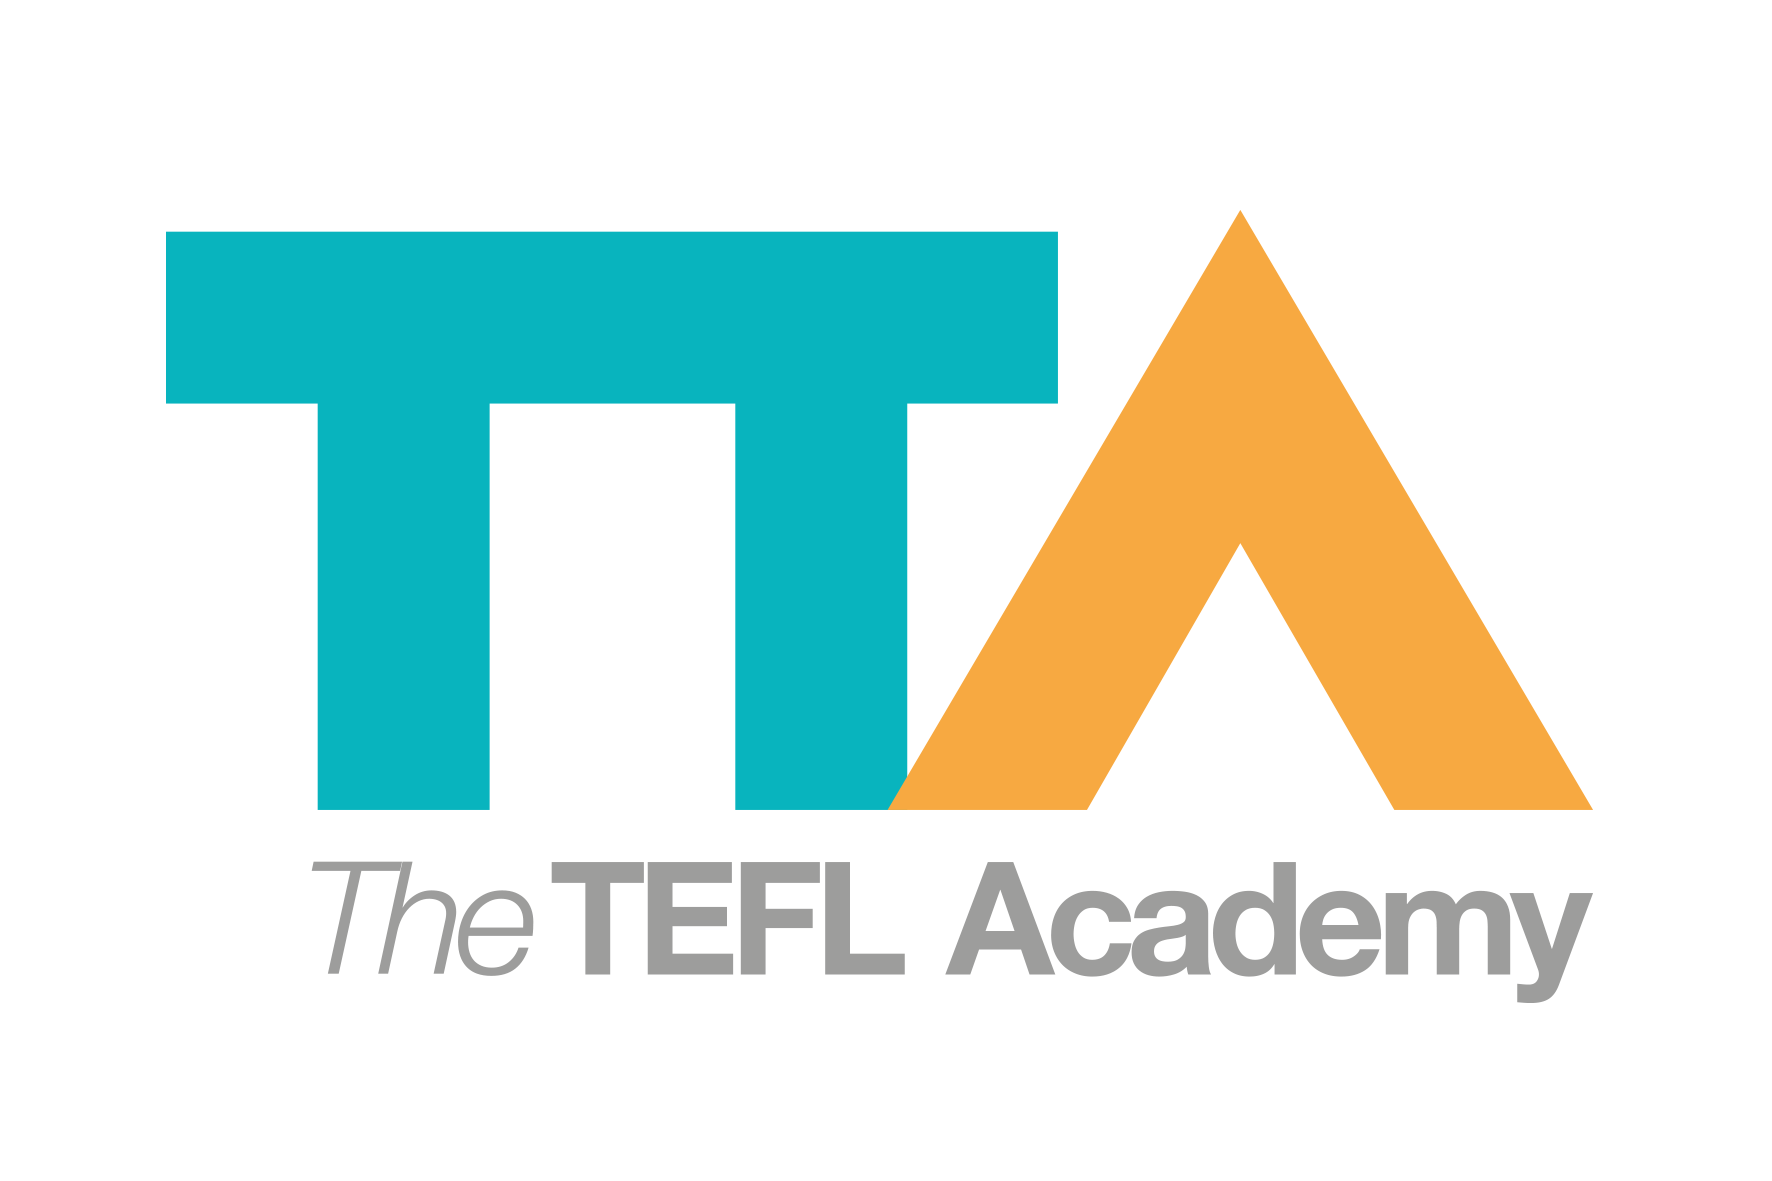 The TEFL Academy e-Learning